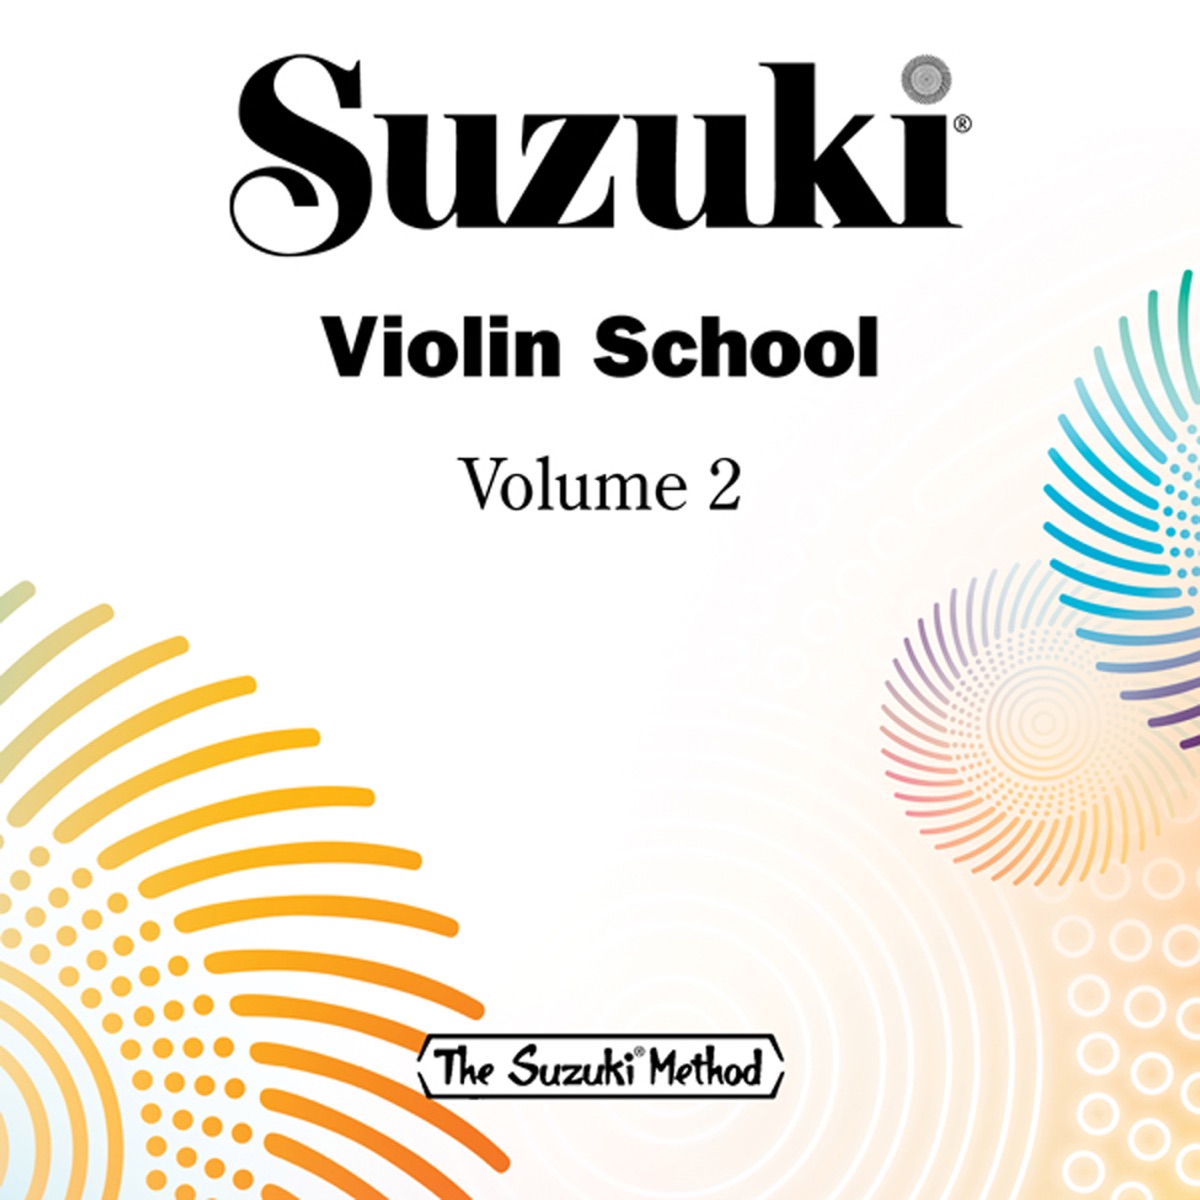 Suzuki Violin School, Vol. 2 by William Preucil on iTunes